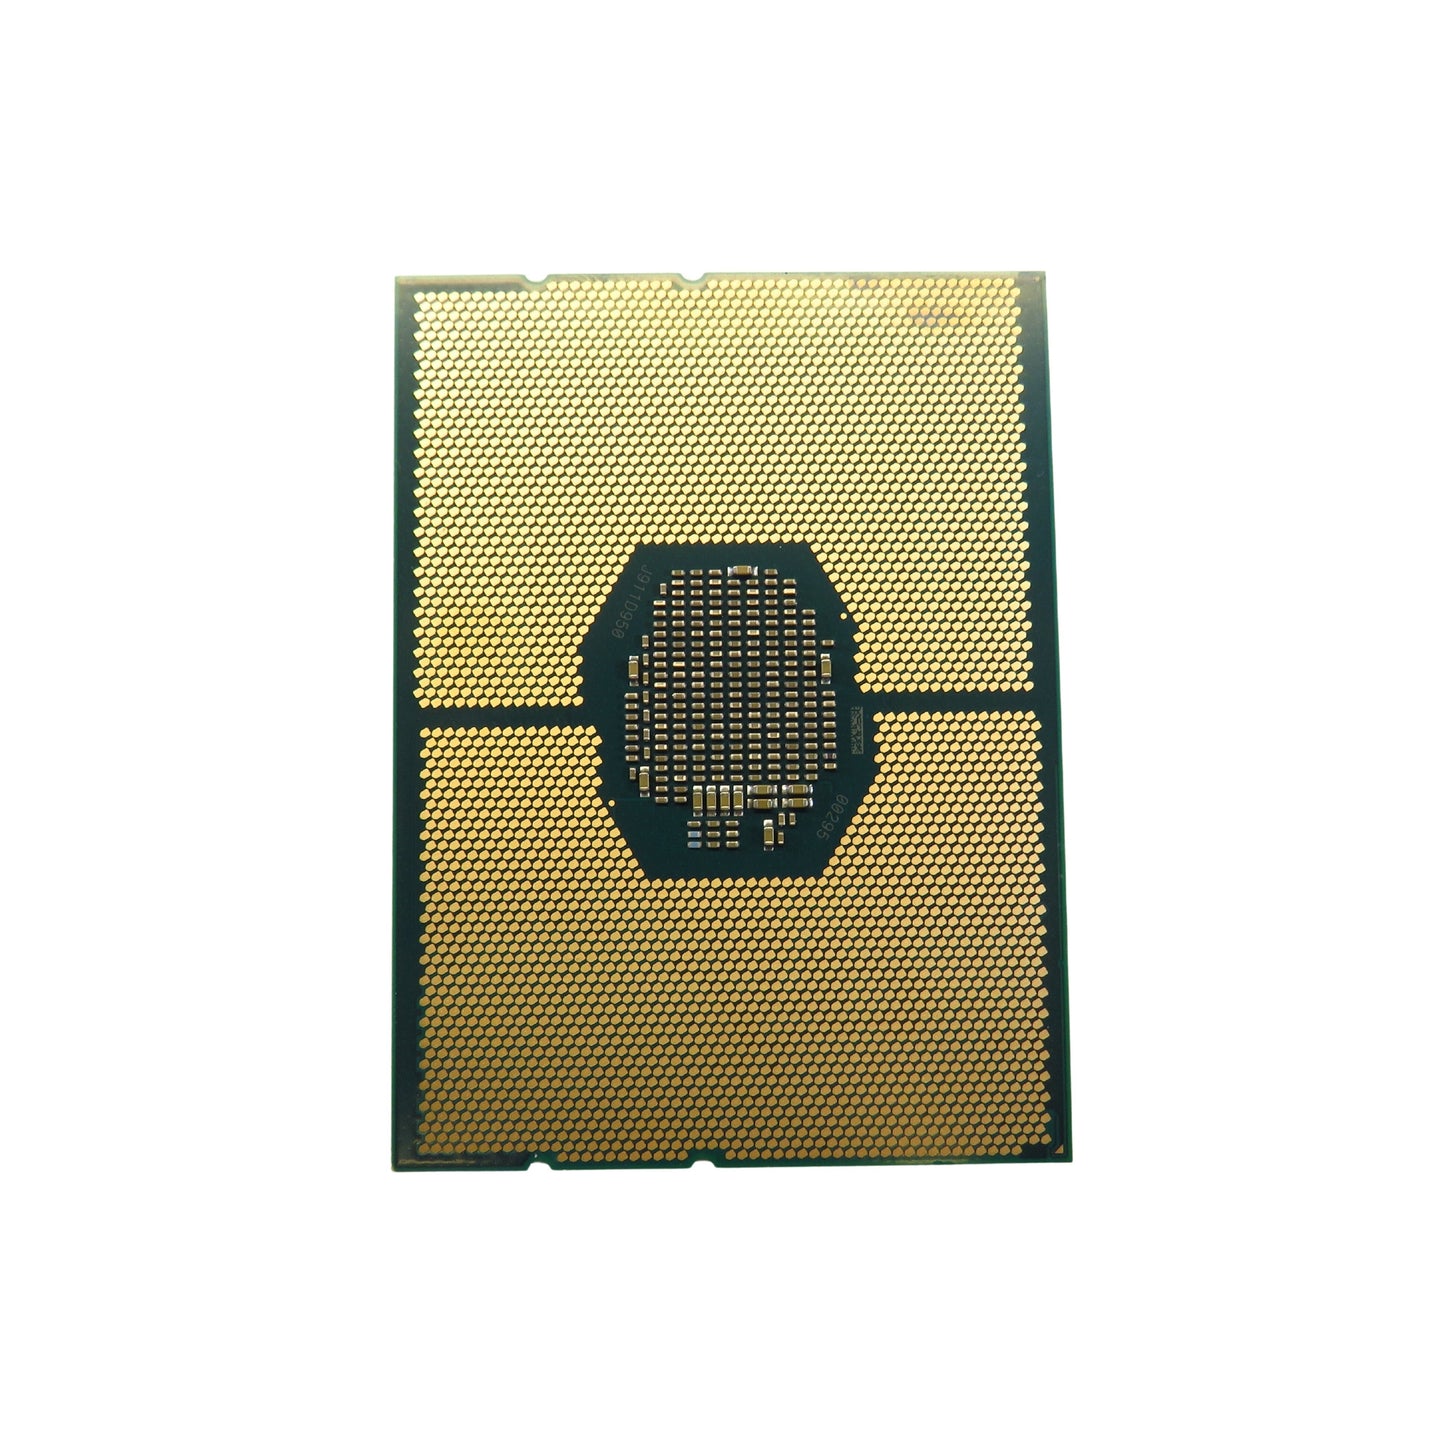 Intel SR3GN Xeon Silver 4112 2.6GHz 4 Core LGA3647 Server CPU Processor (Refurbished)